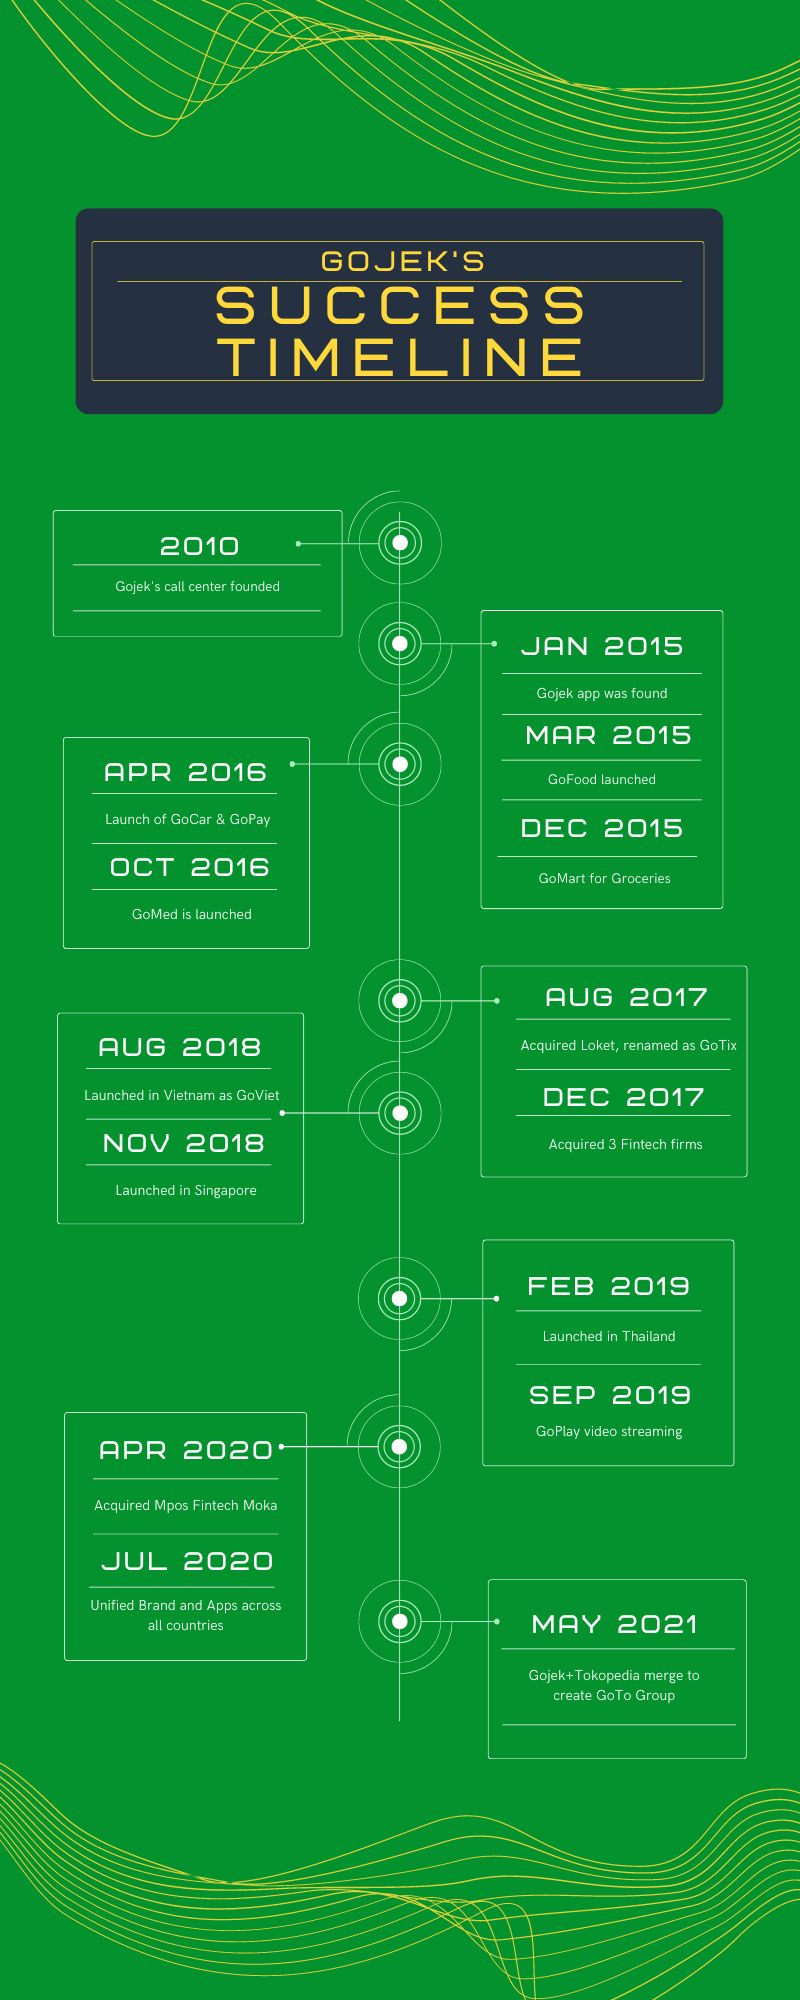 Gojek's Success Timeline